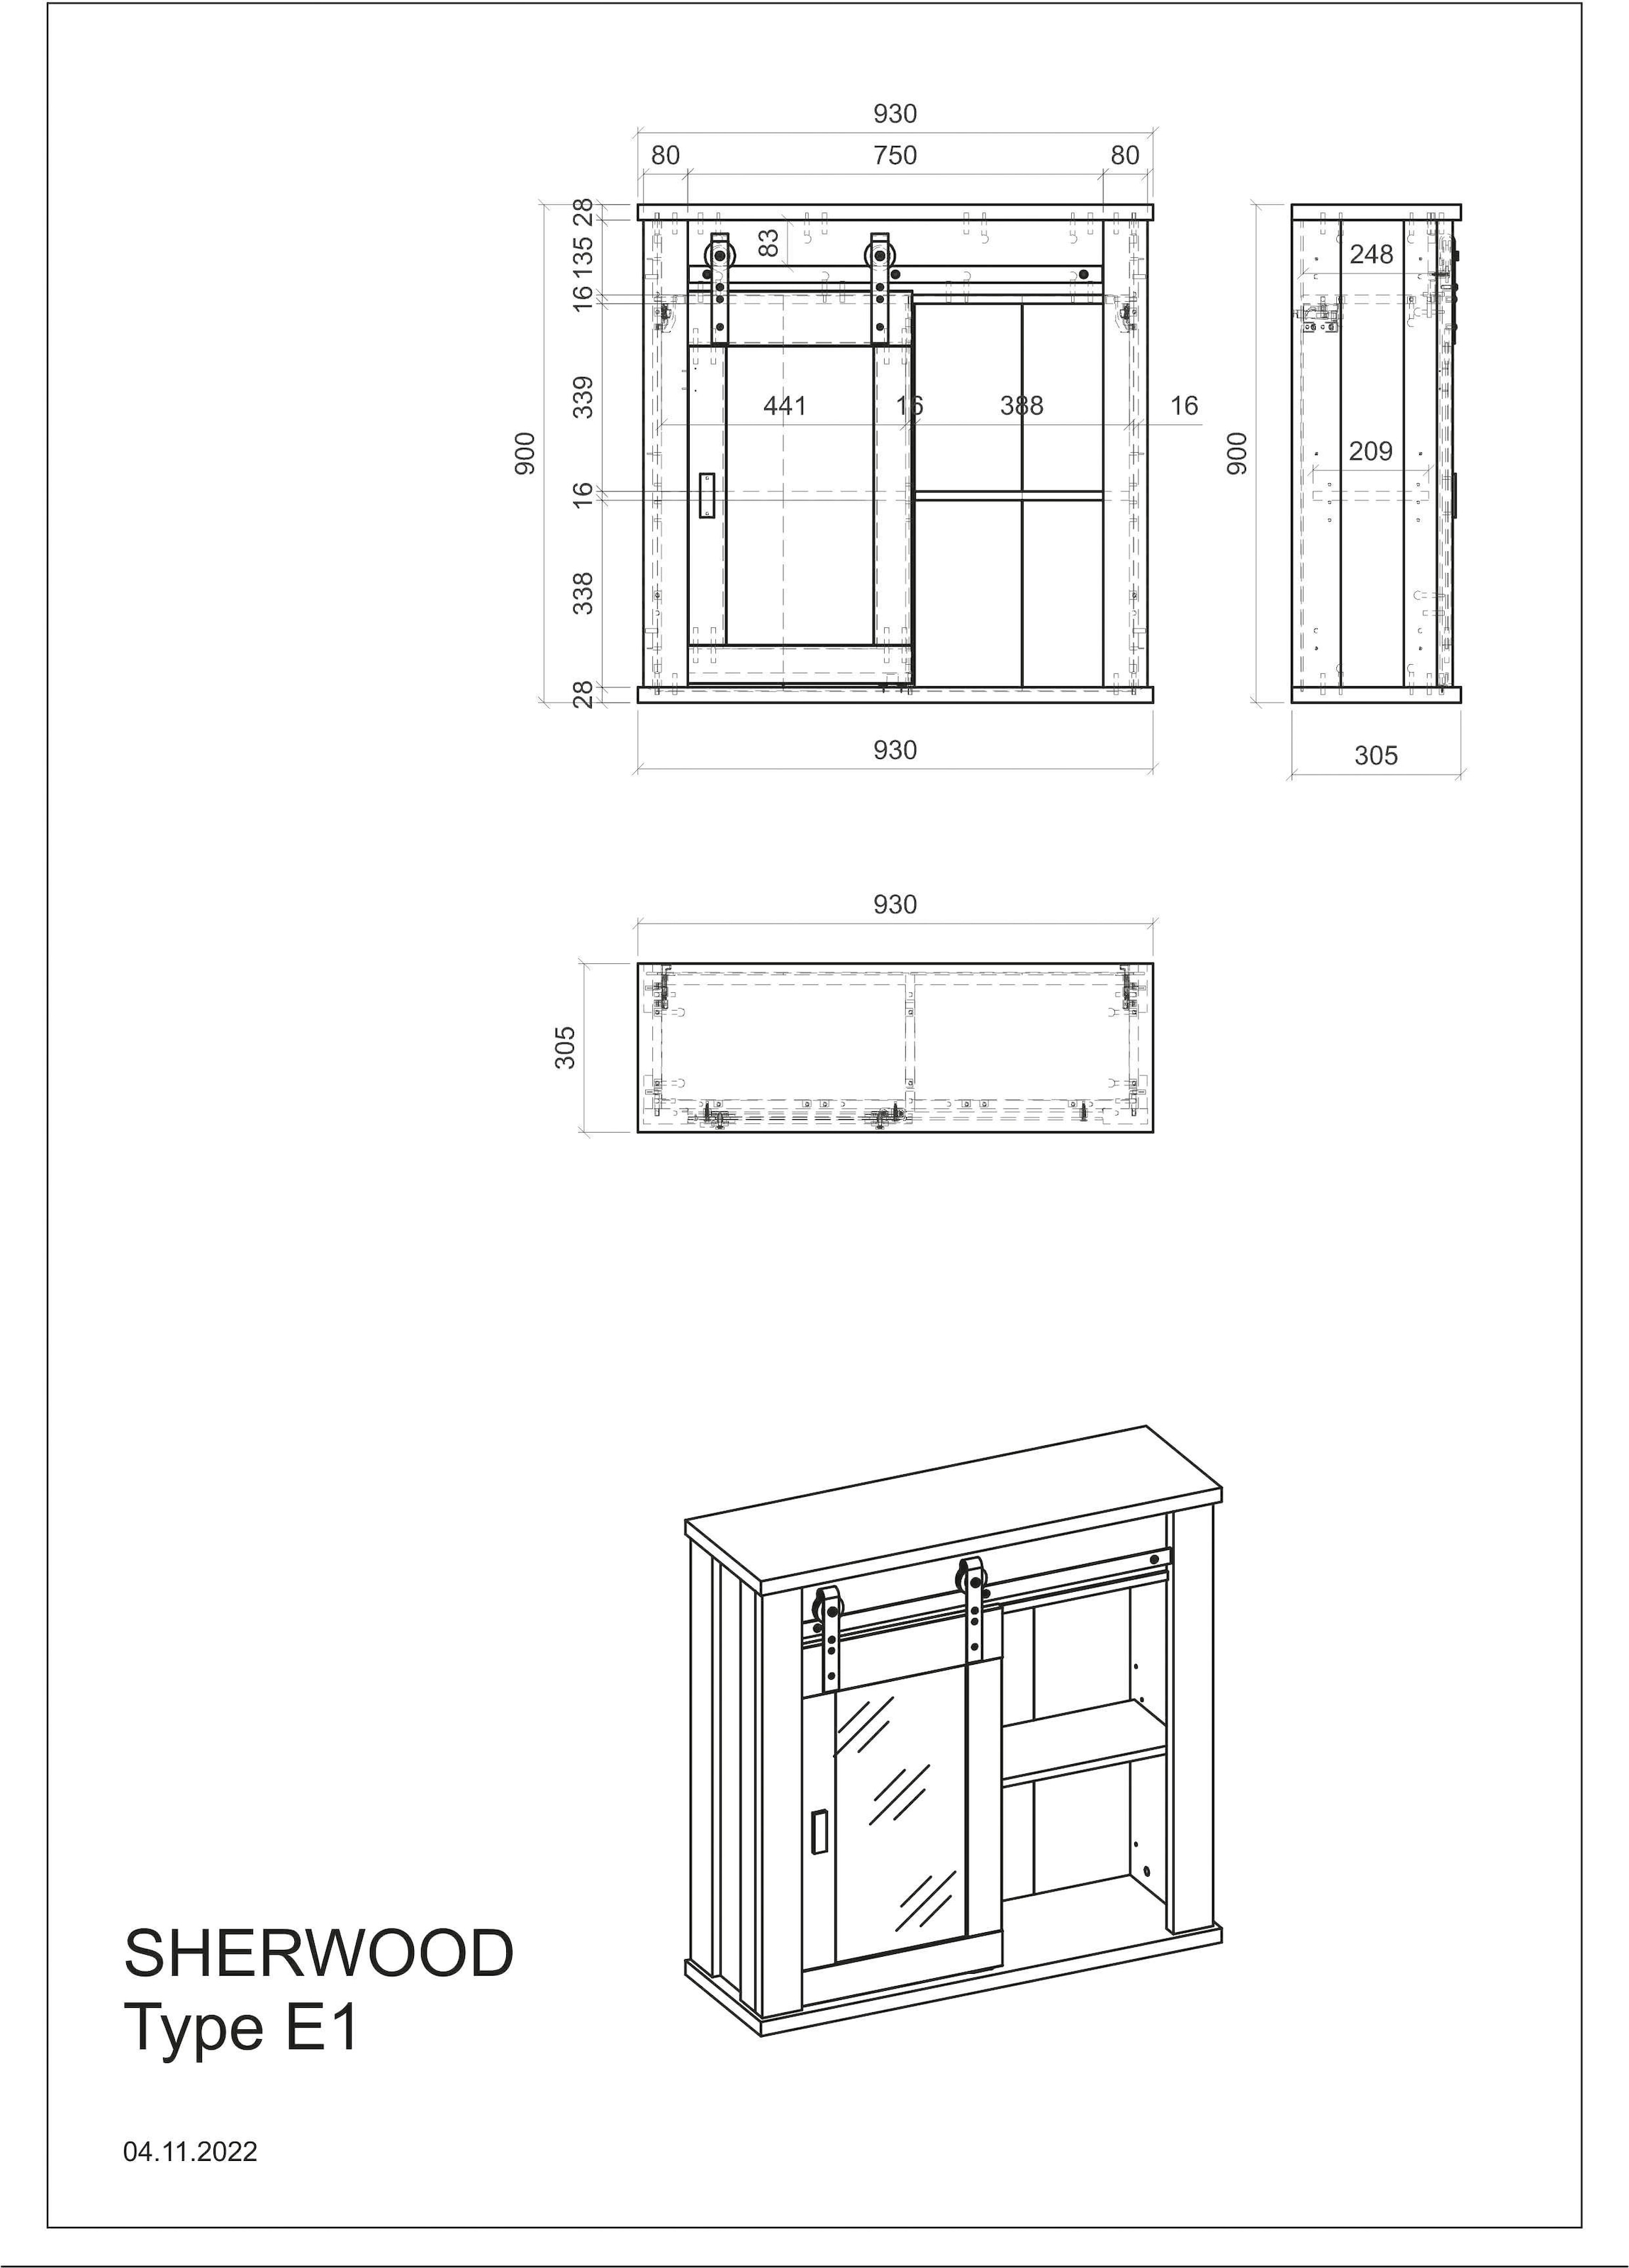 Home affaire Hängeschrank »Sherwood«, mit Scheunentorbeschlag aus Metall, Höhe 90 cm